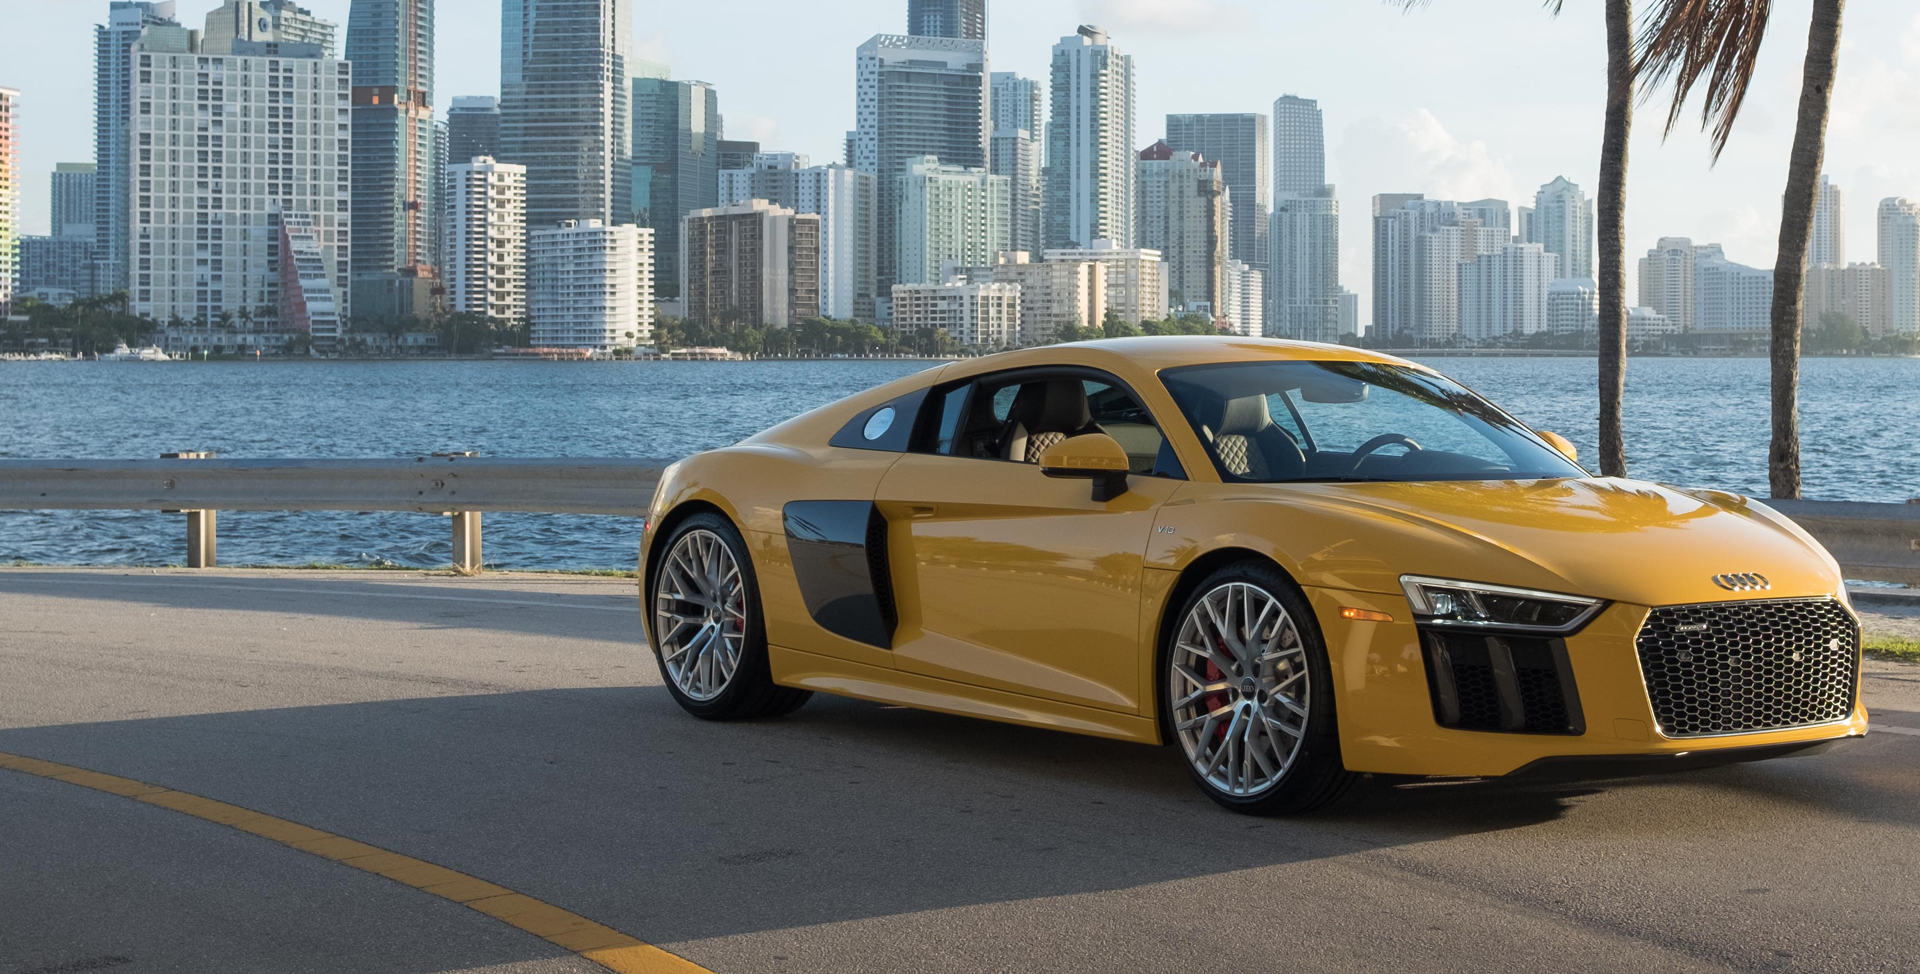 The Collection - Audi Dealership Miami FL